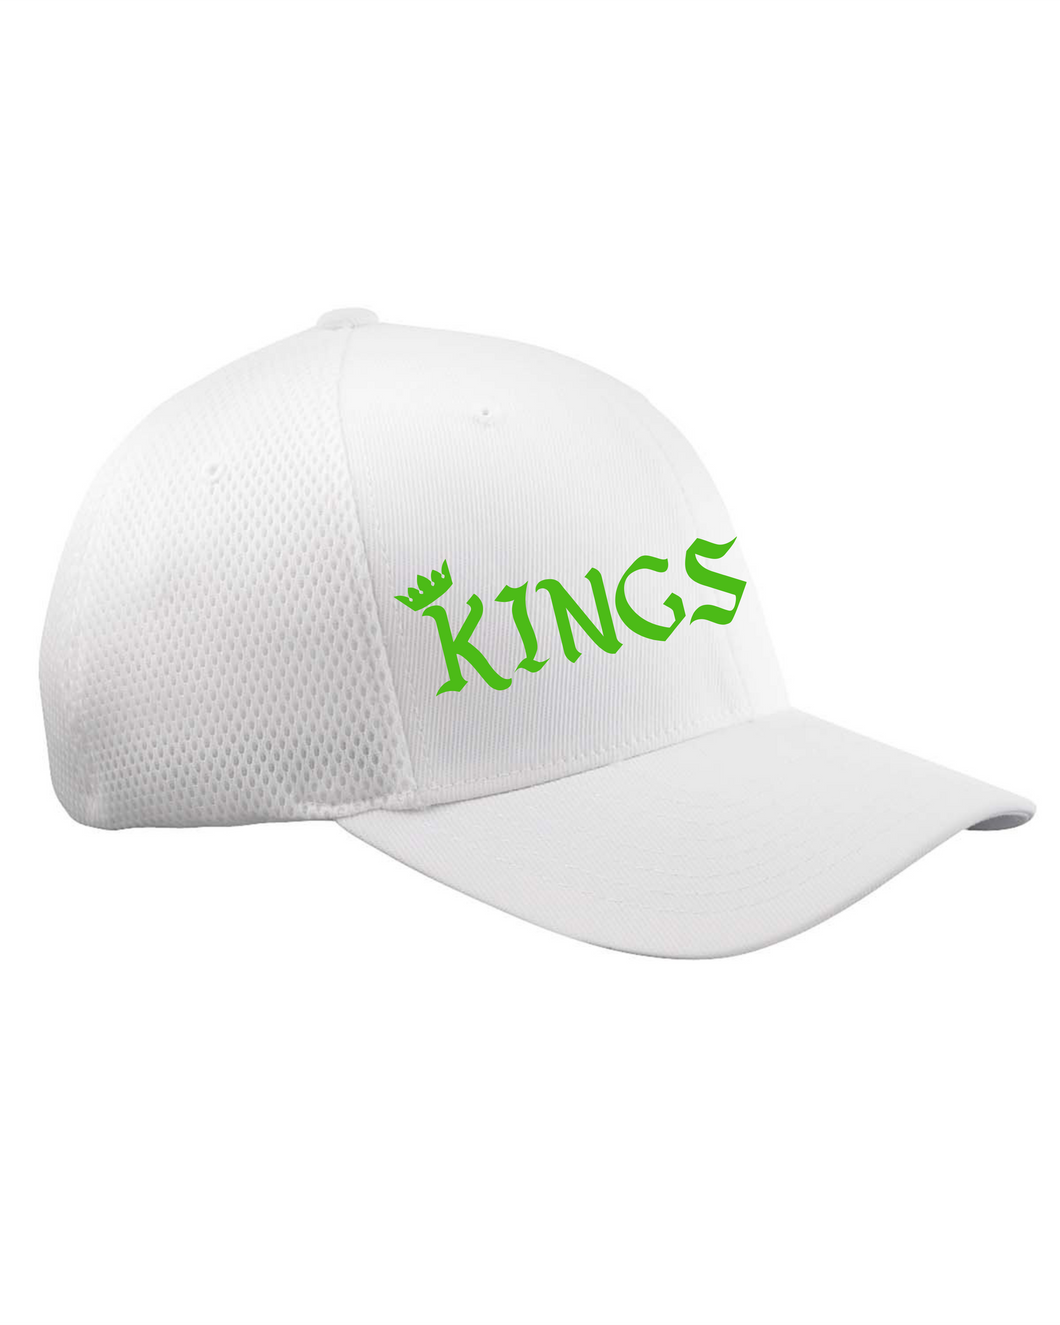 ATL-KINGS-910-2 - Flexfit Adult Ultrafibre and Airmesh Cap - KINGS Logo